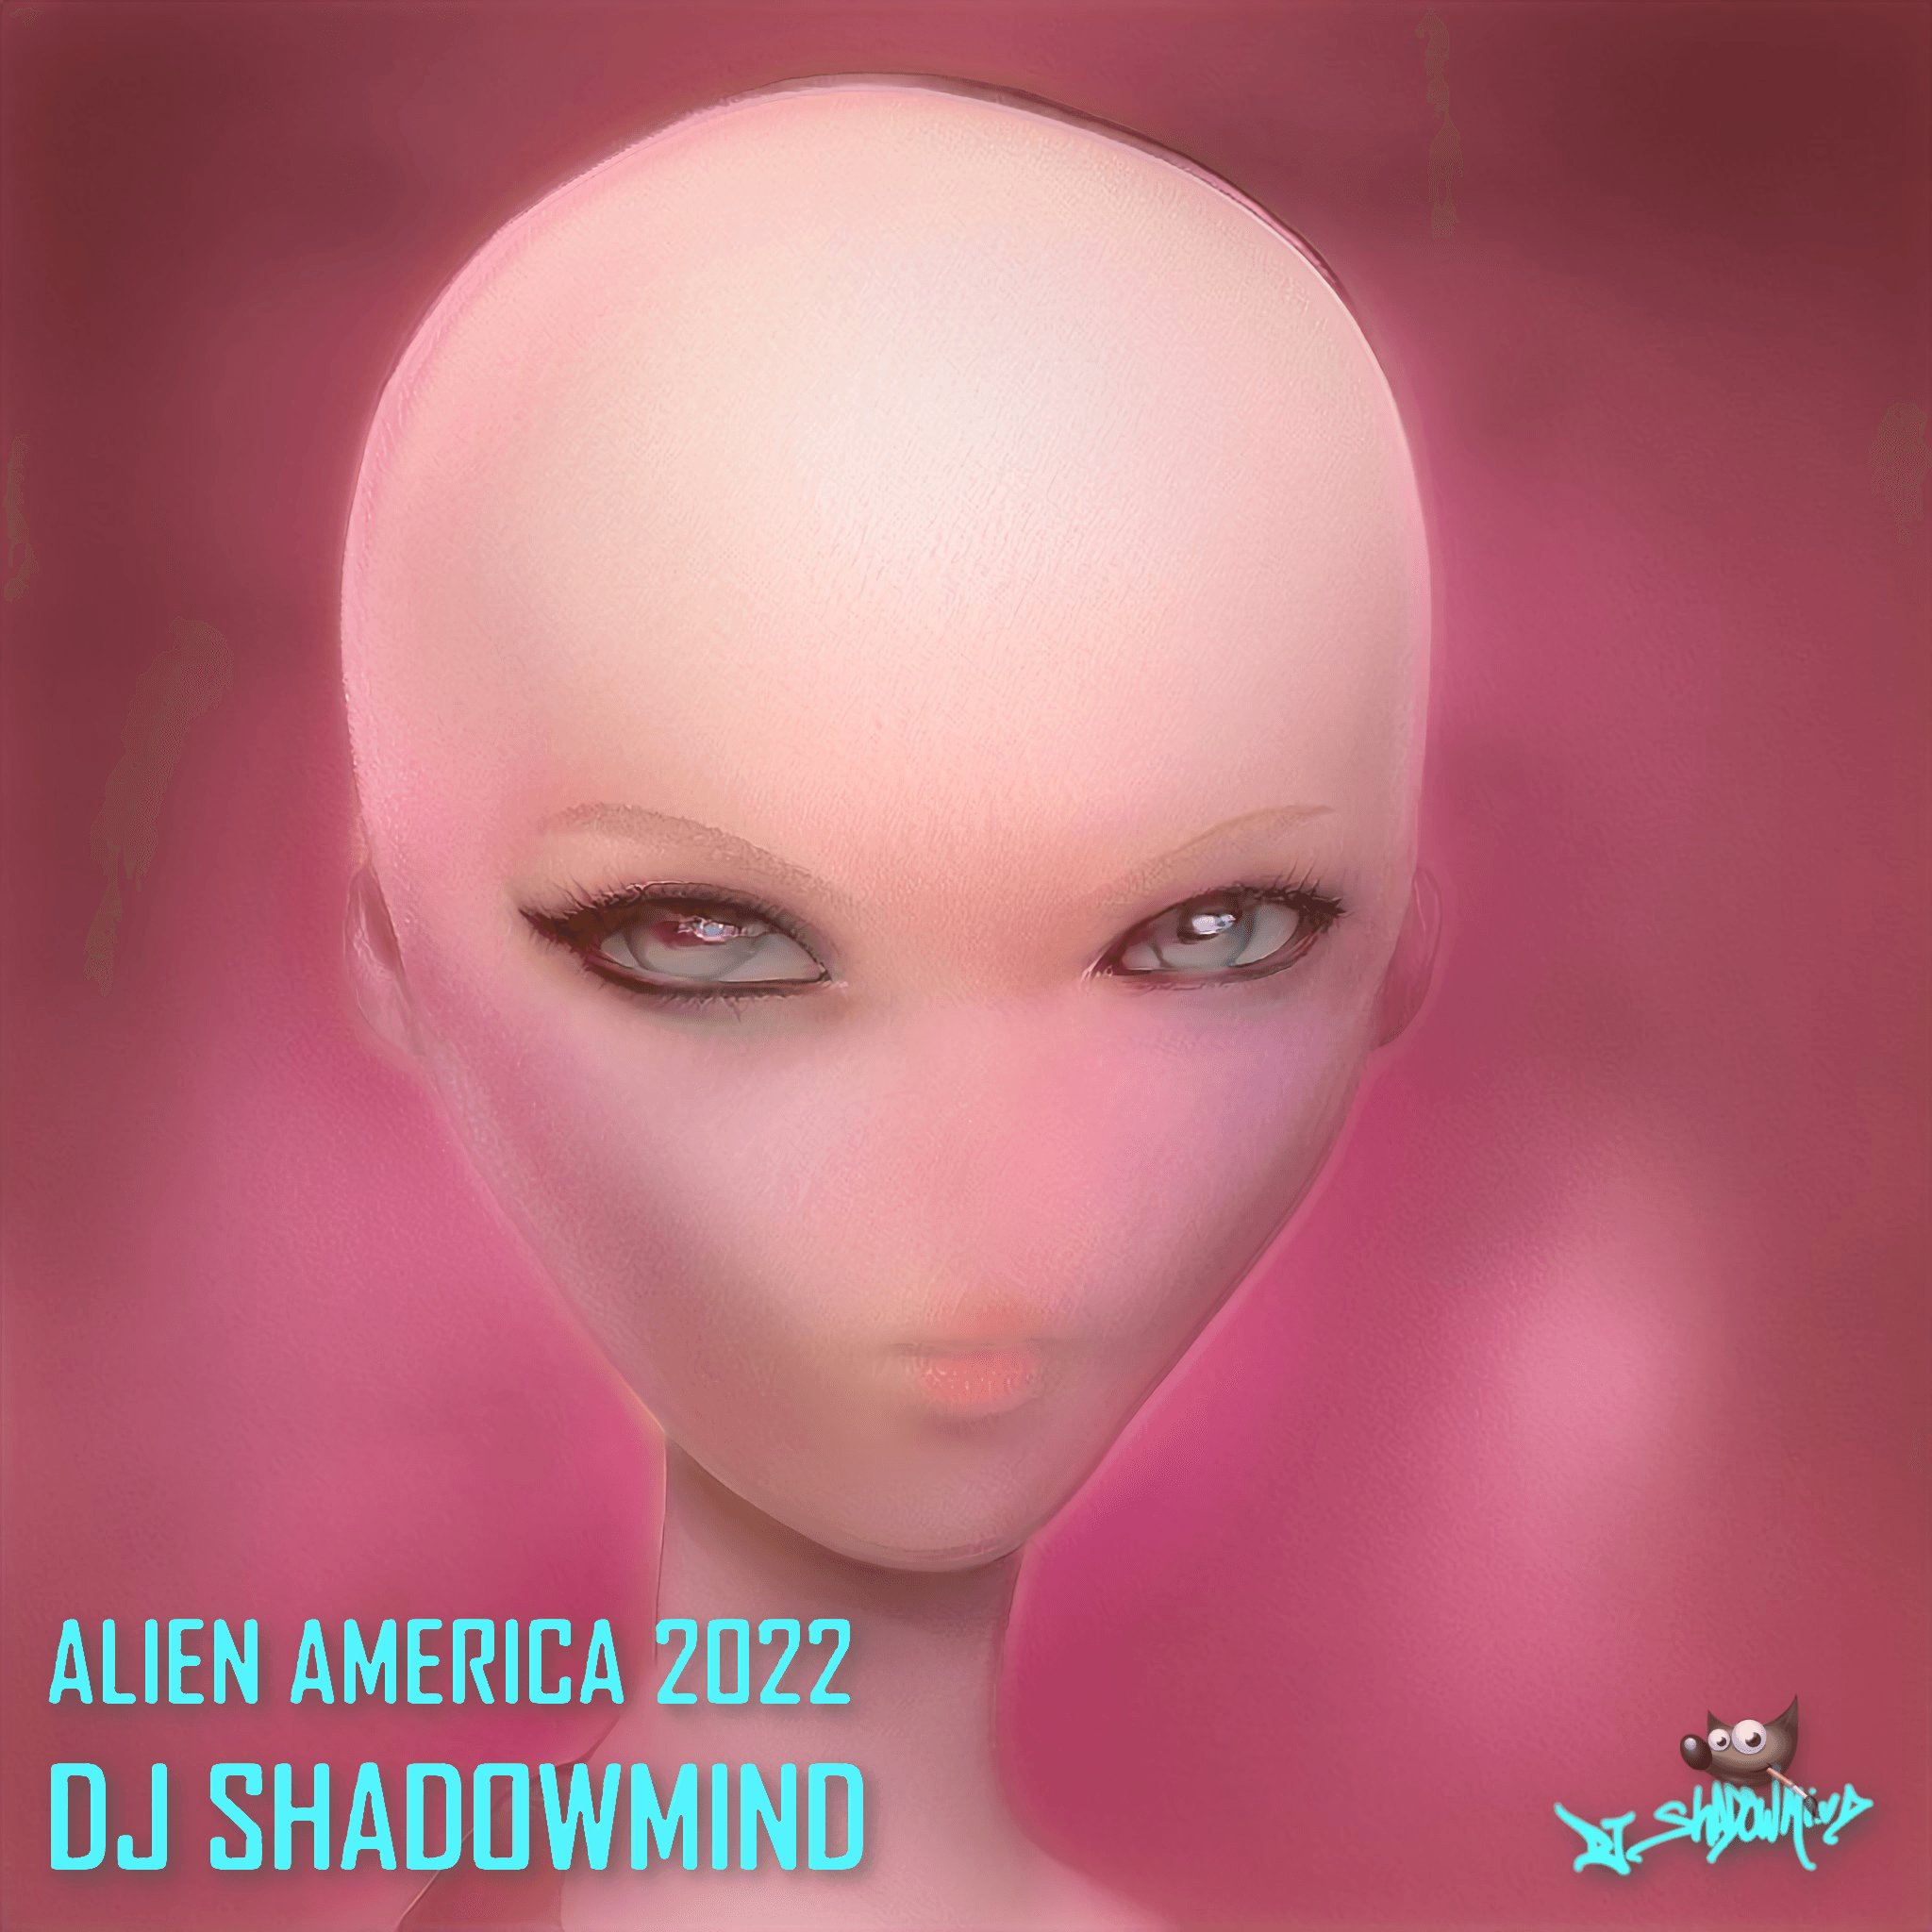 Alien America 2022 - Agent 173